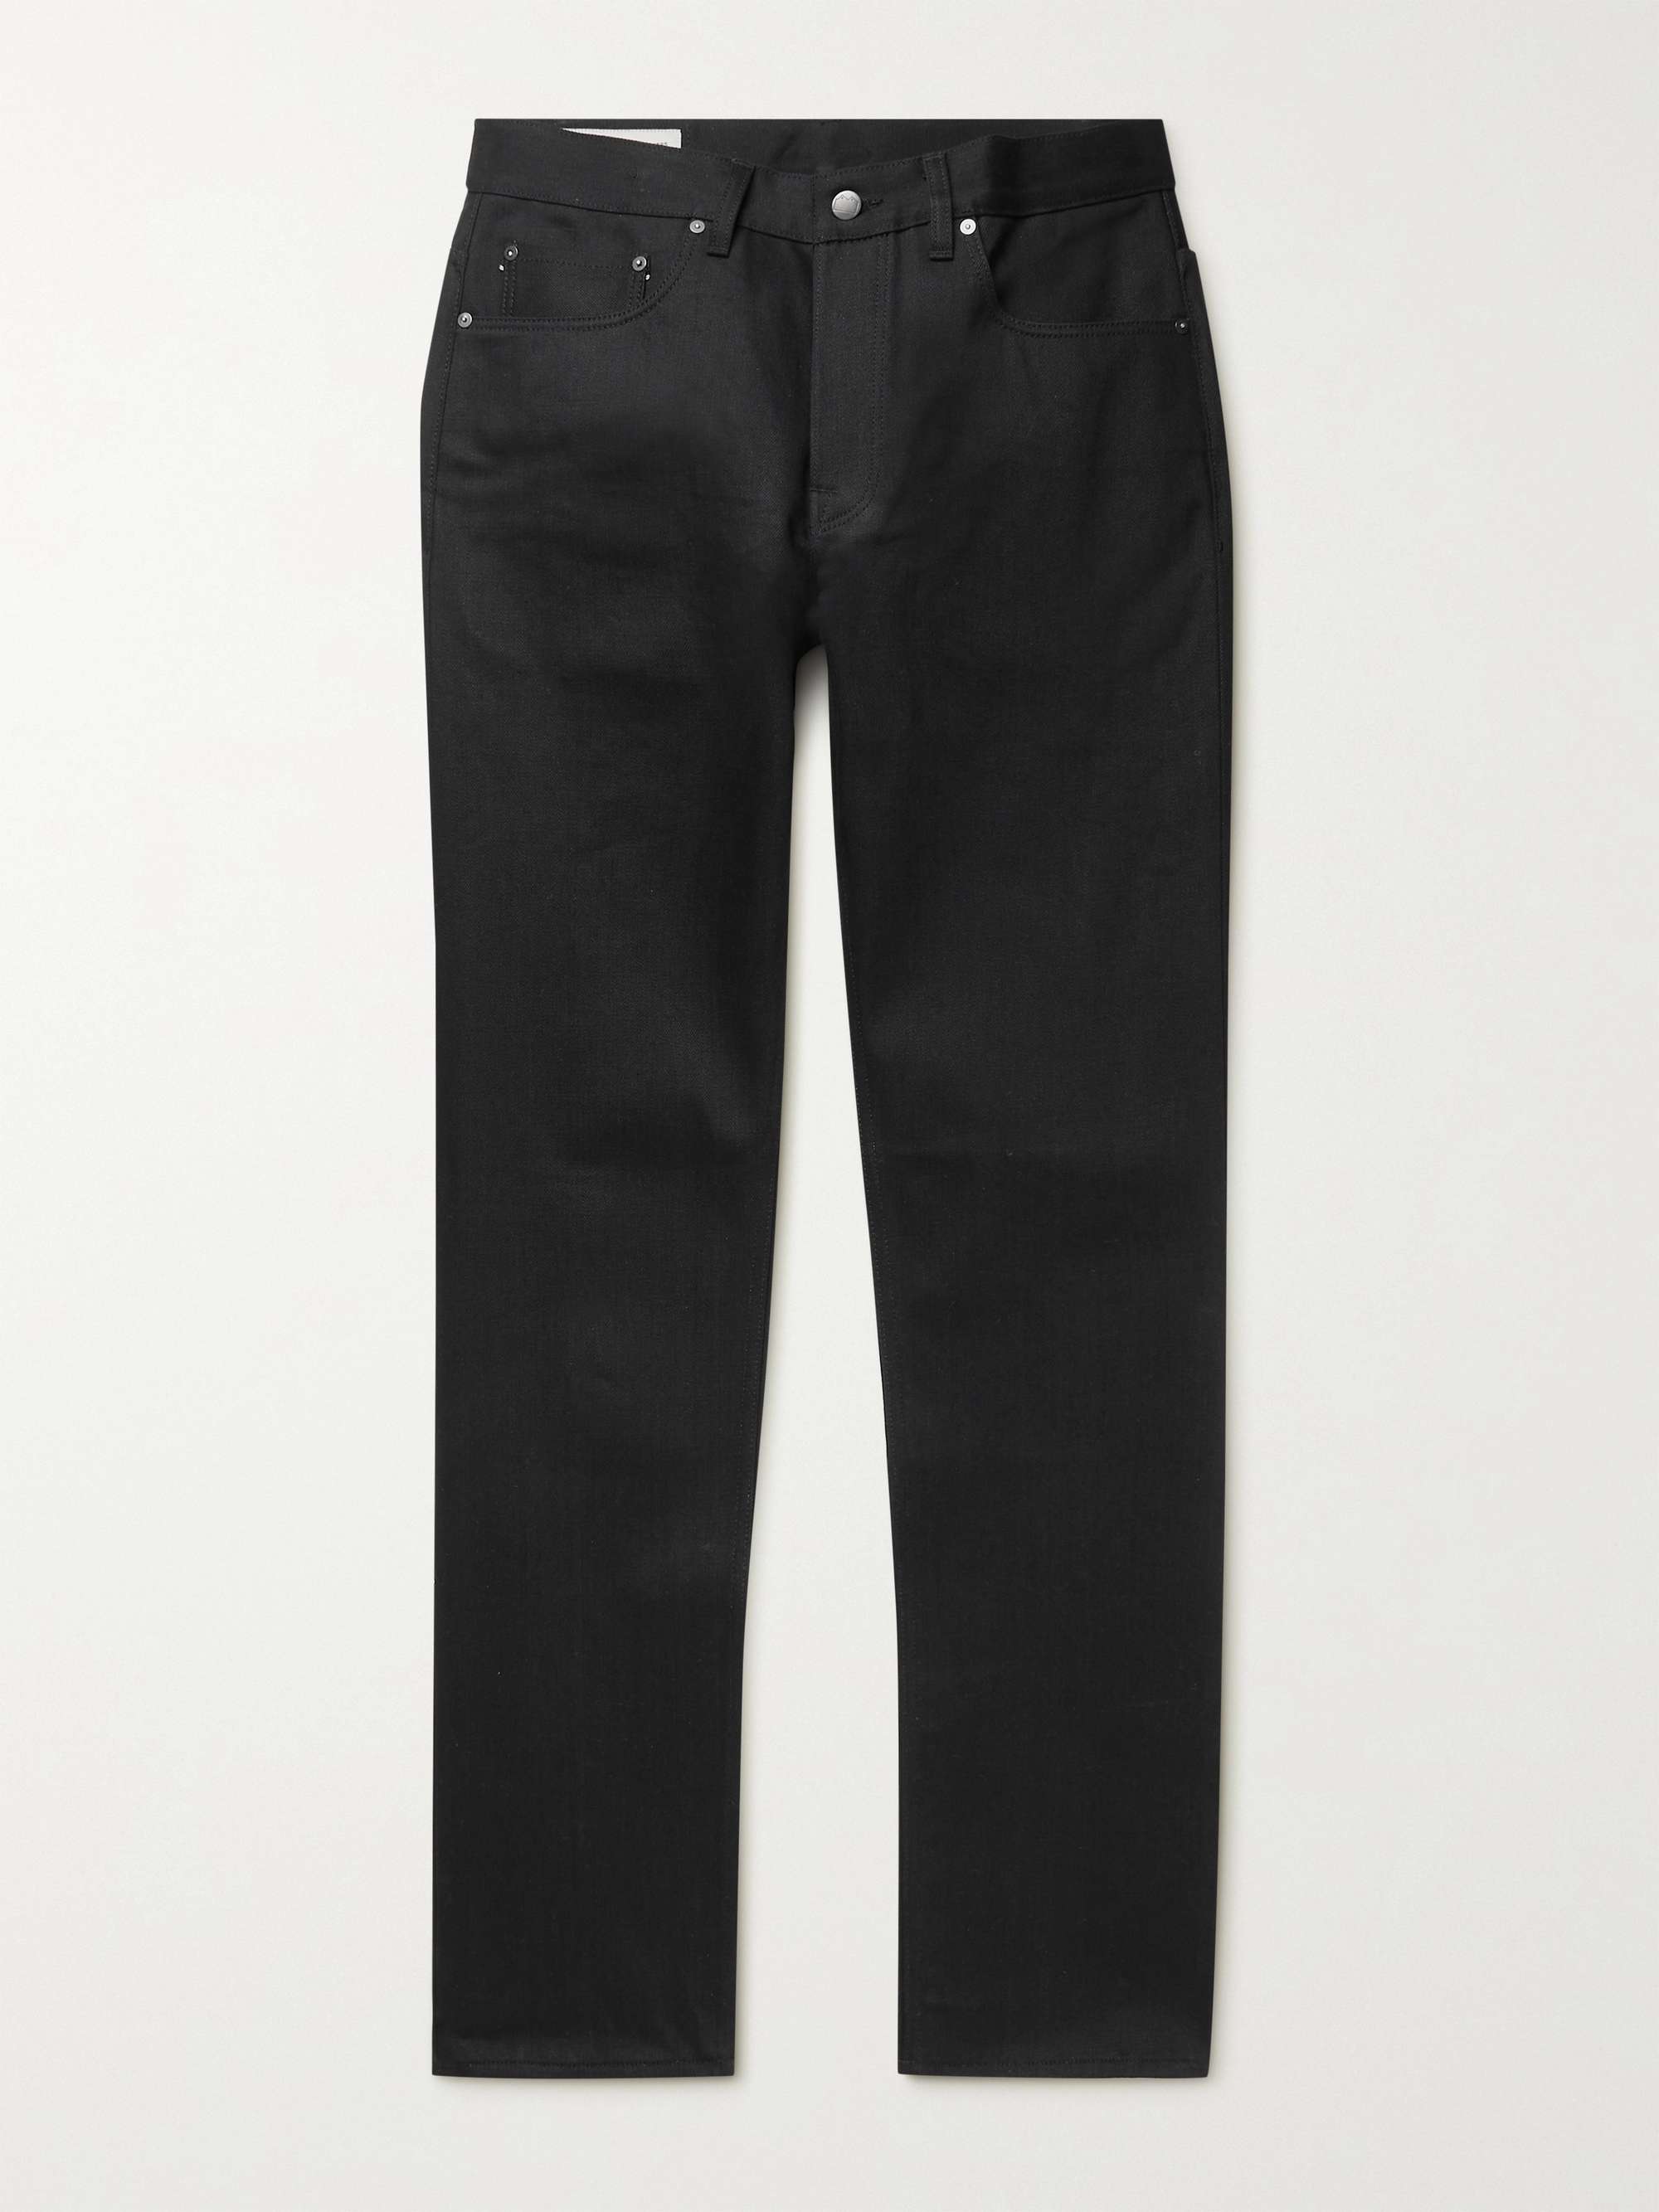 BLACKHORSE LANE ATELIERS W12 Slim-Fit Tapered Raw Organic Selvedge Denim Jeans